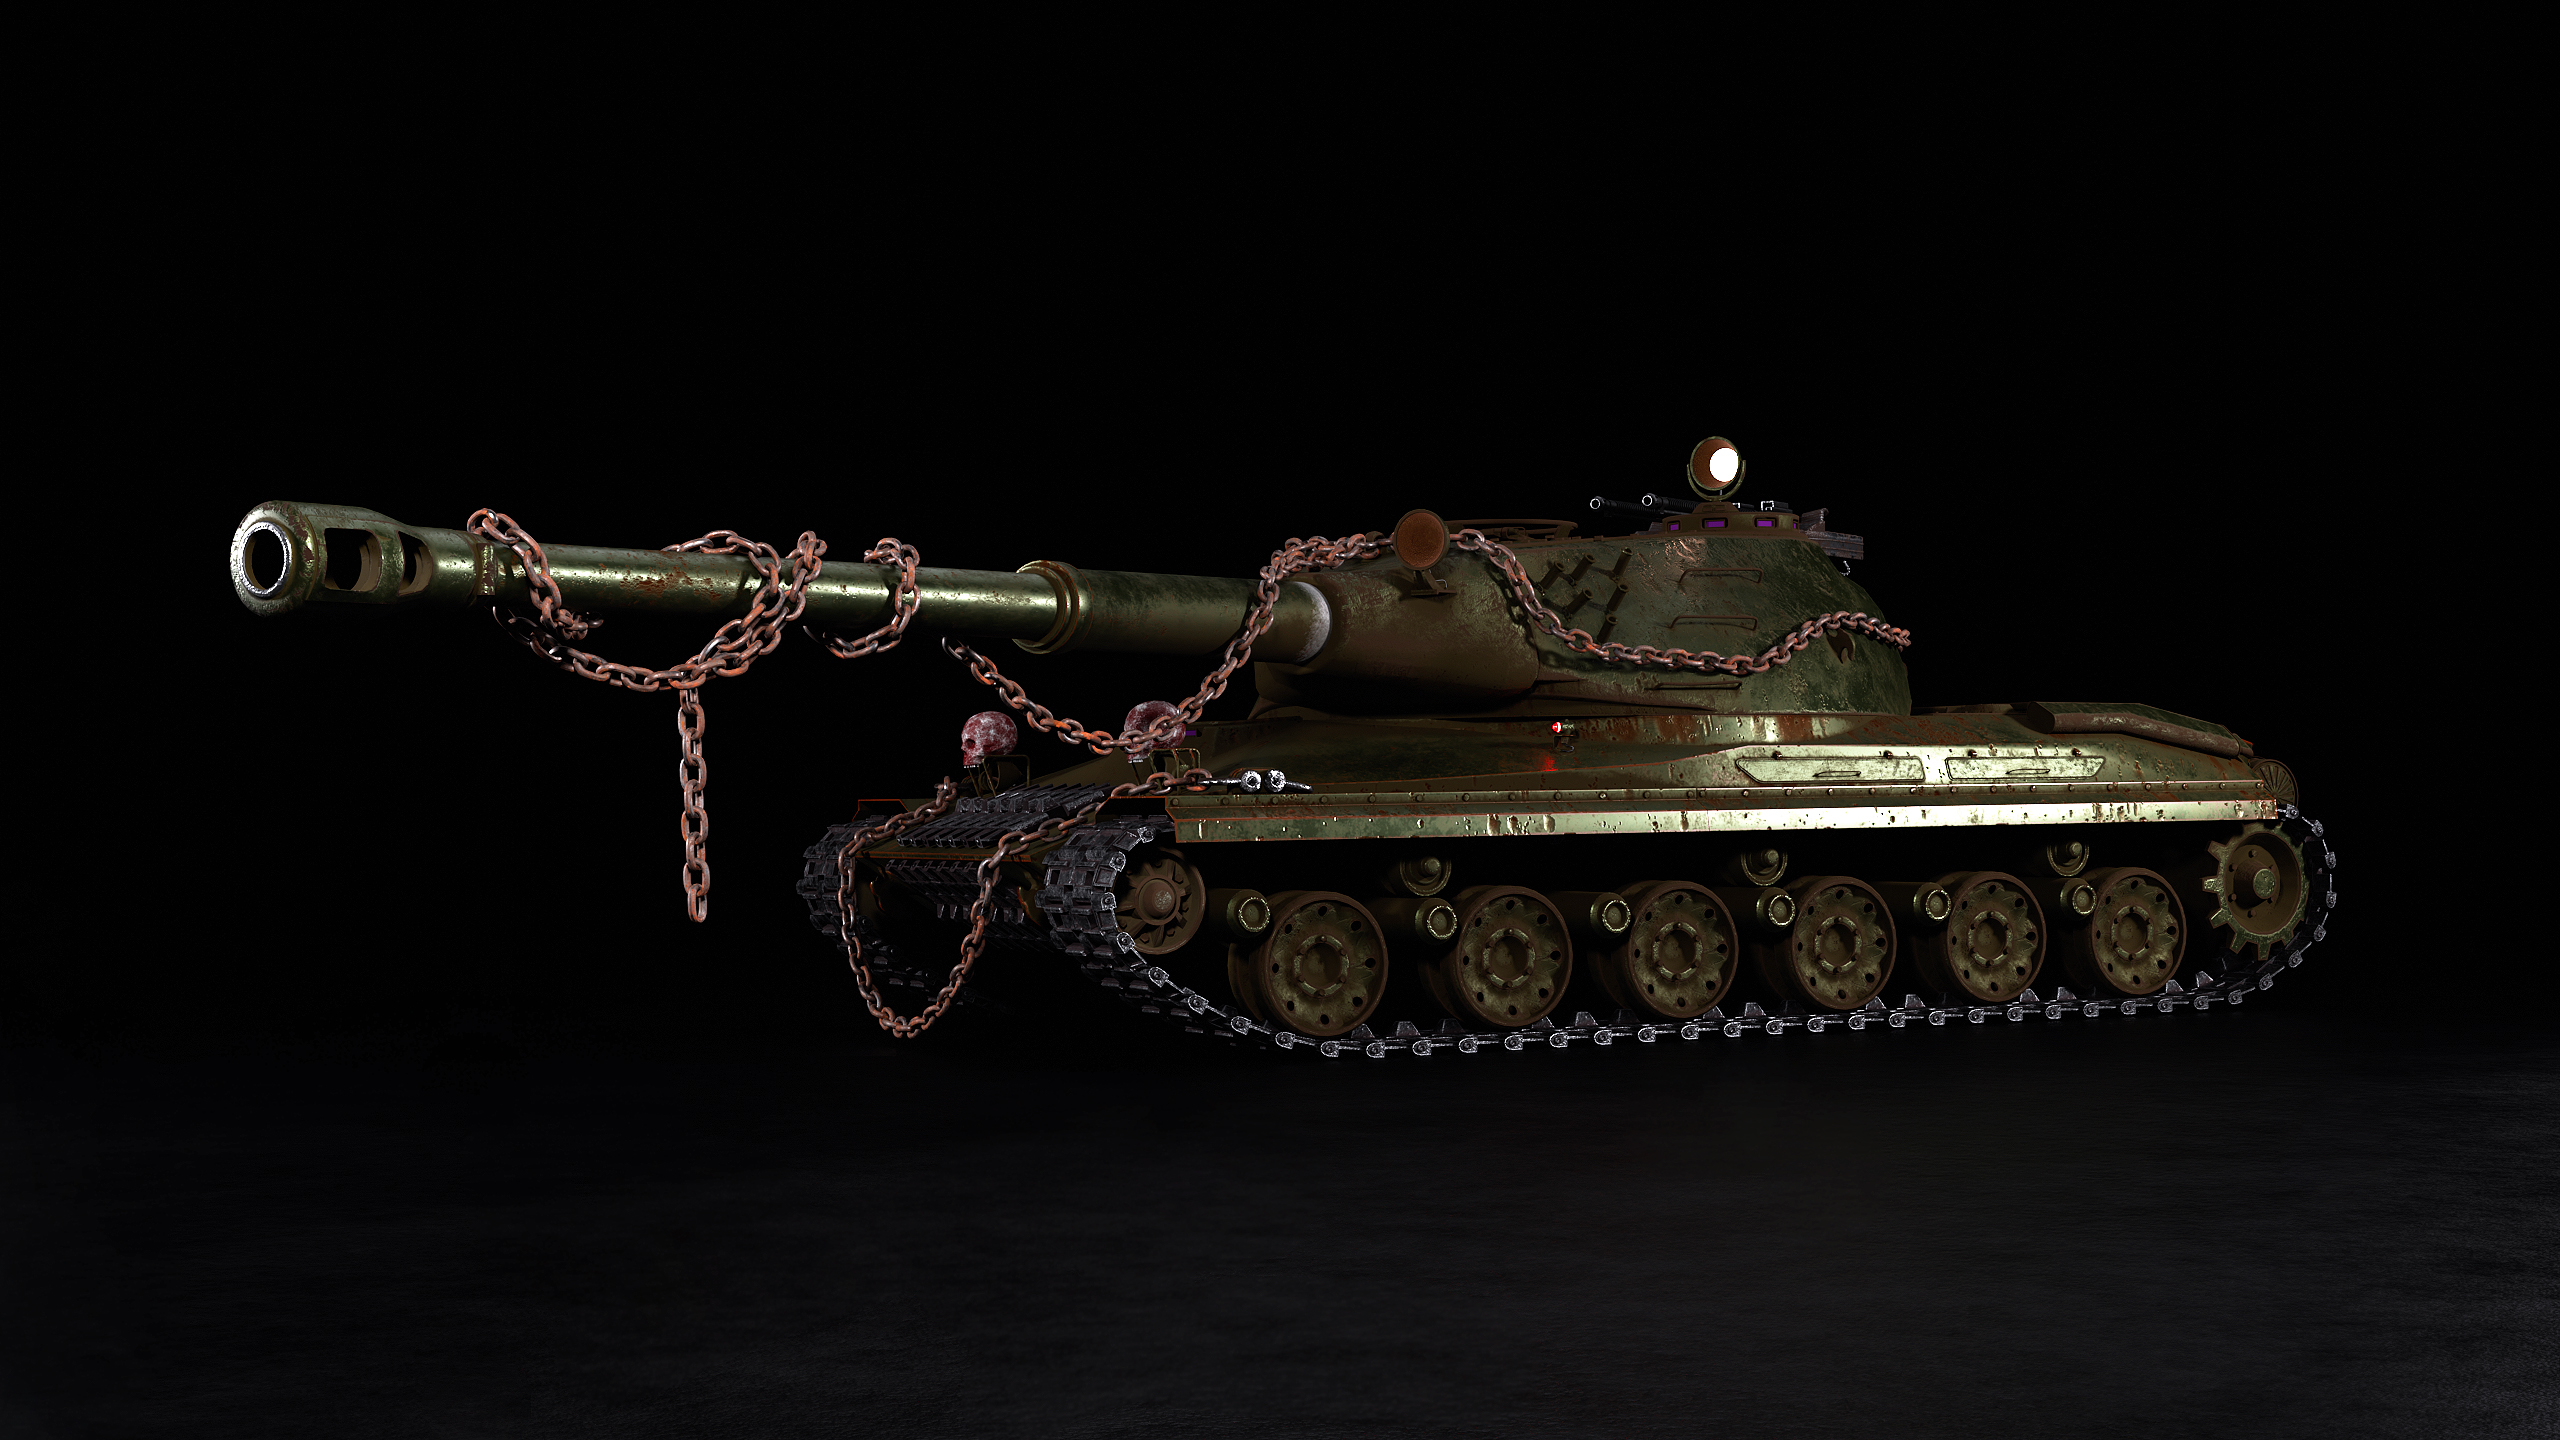 60TP 60TP The Marauder Tank Cold War Chains Rust Skull Fictional PunkCrow 3D CGi Lightning Lights 2560x1440